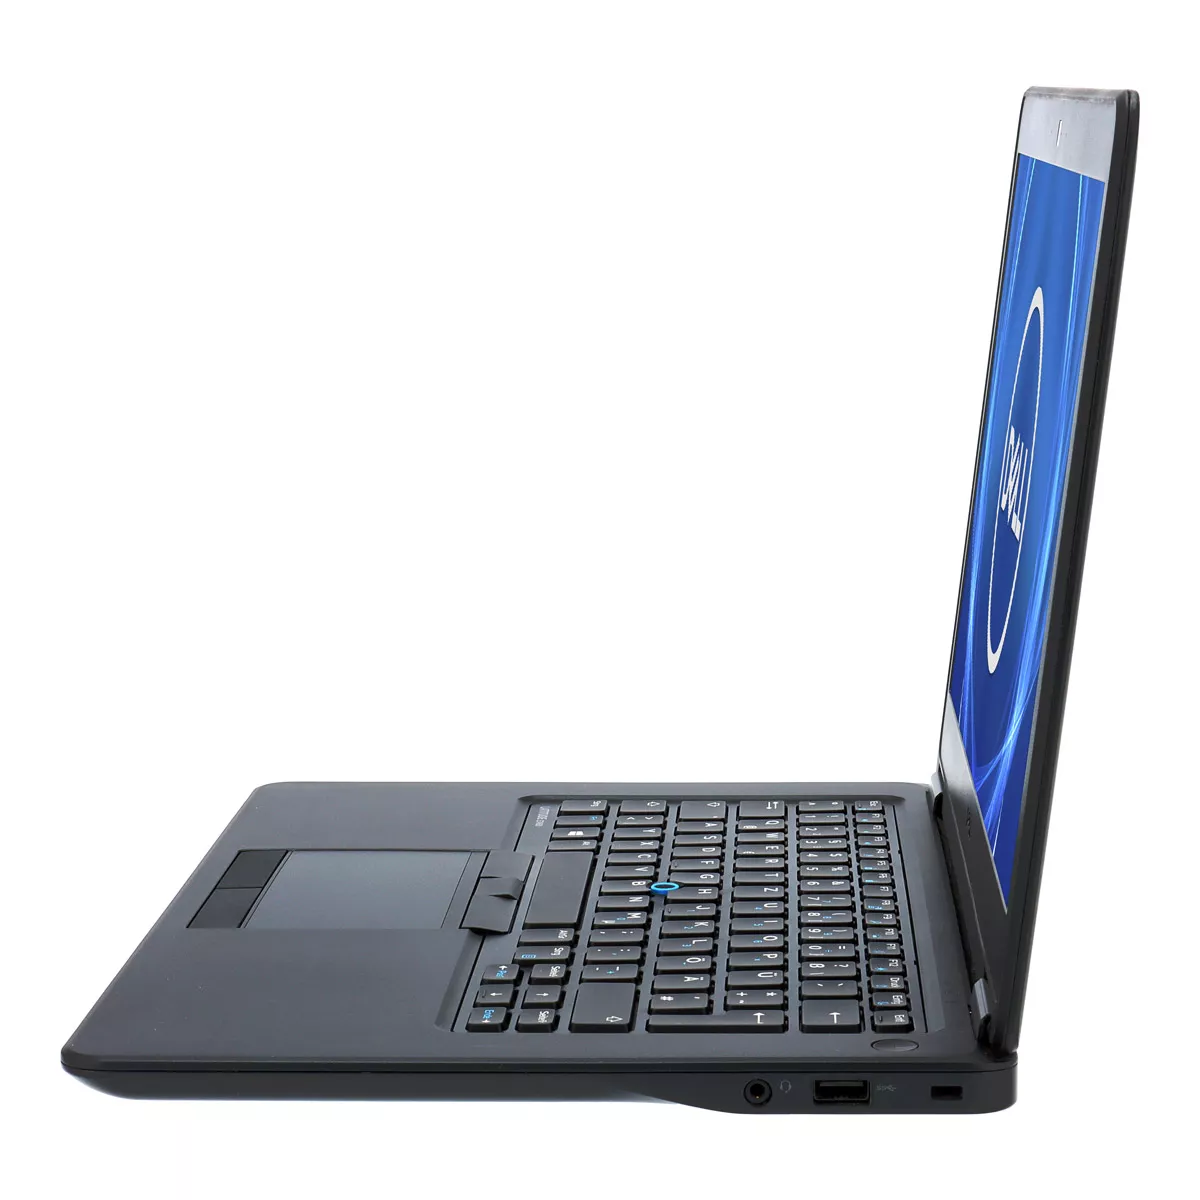 Dell Latitude E7450 Core i7 5600U nVidia Geforce 840M 2,0 GB Full-HD 240 GB SSD Webcam A+